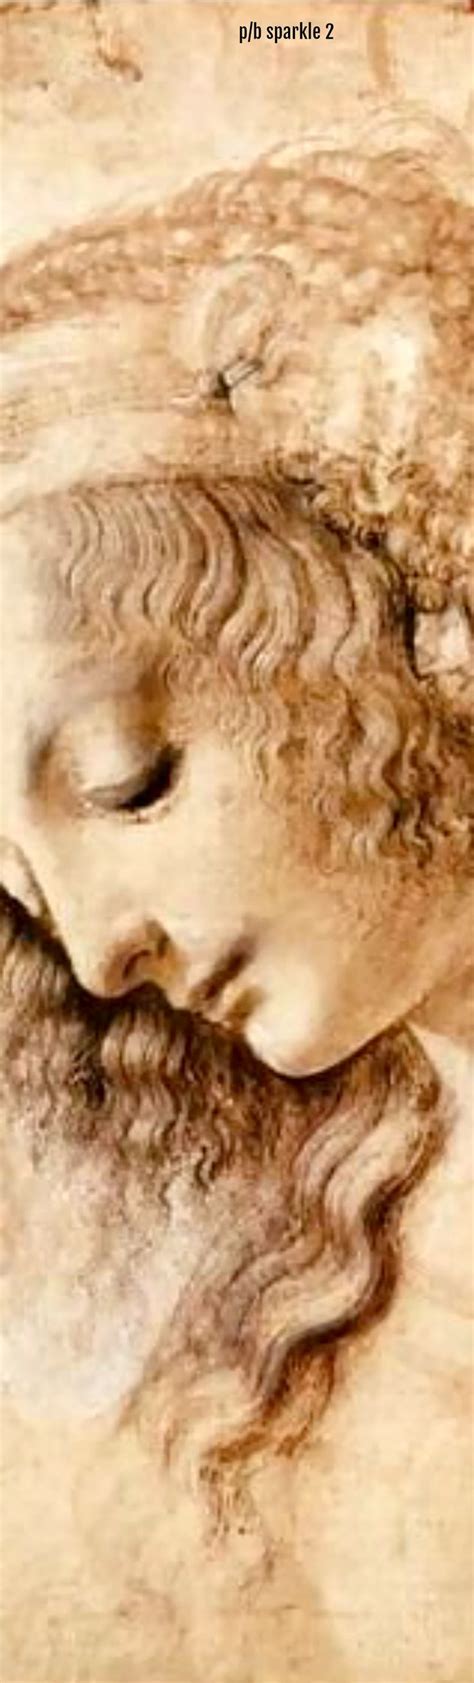 Leonardo Da Vinci 1452 1519 Study For The Face Of The Virgin Mary Of